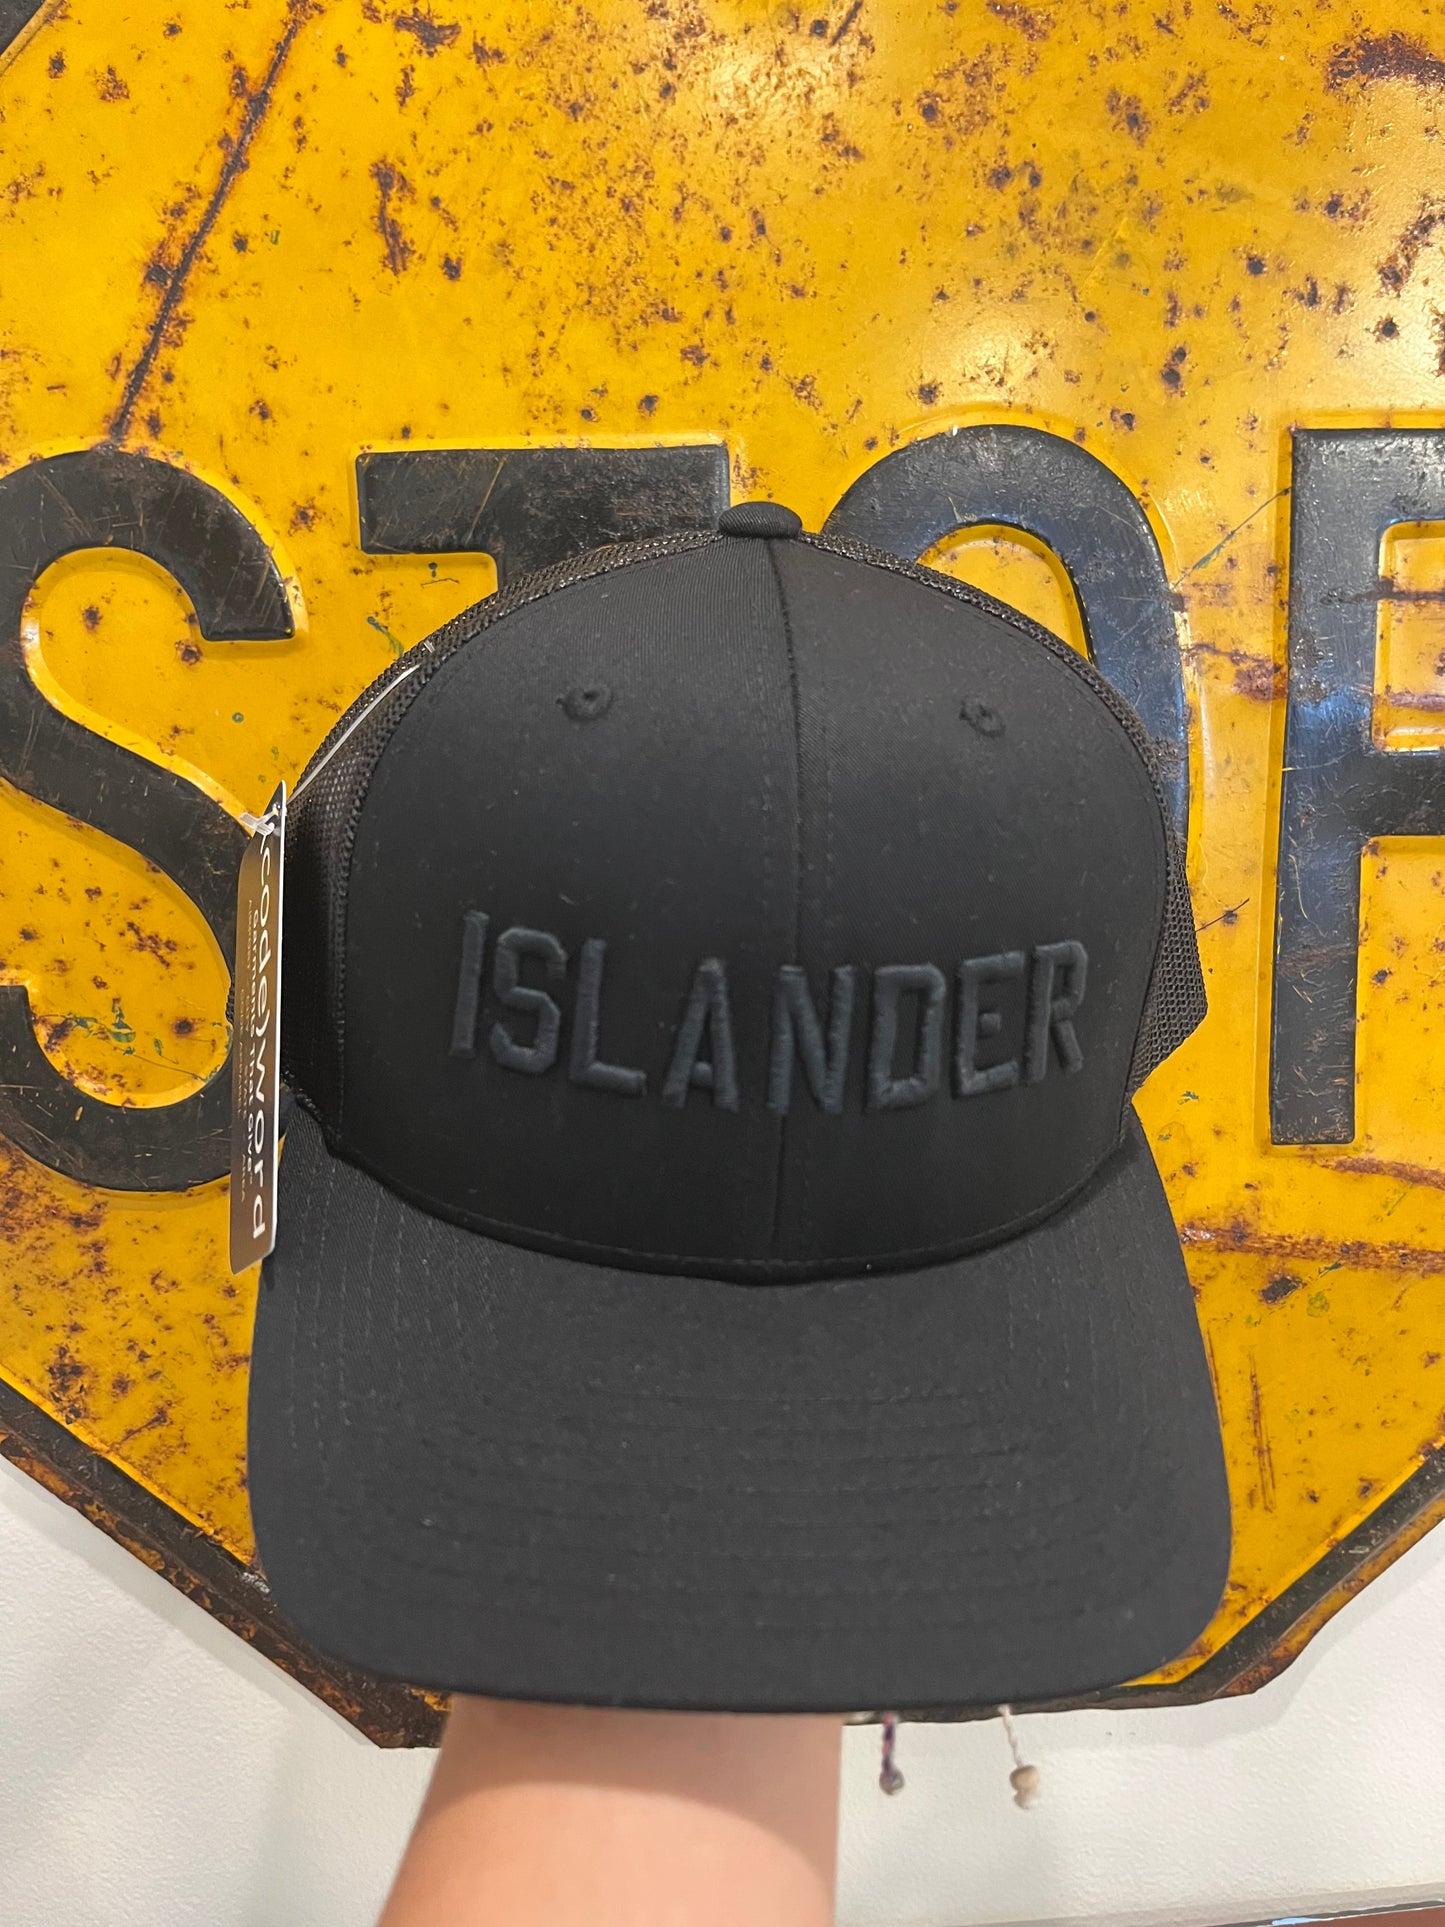 Islander black hats